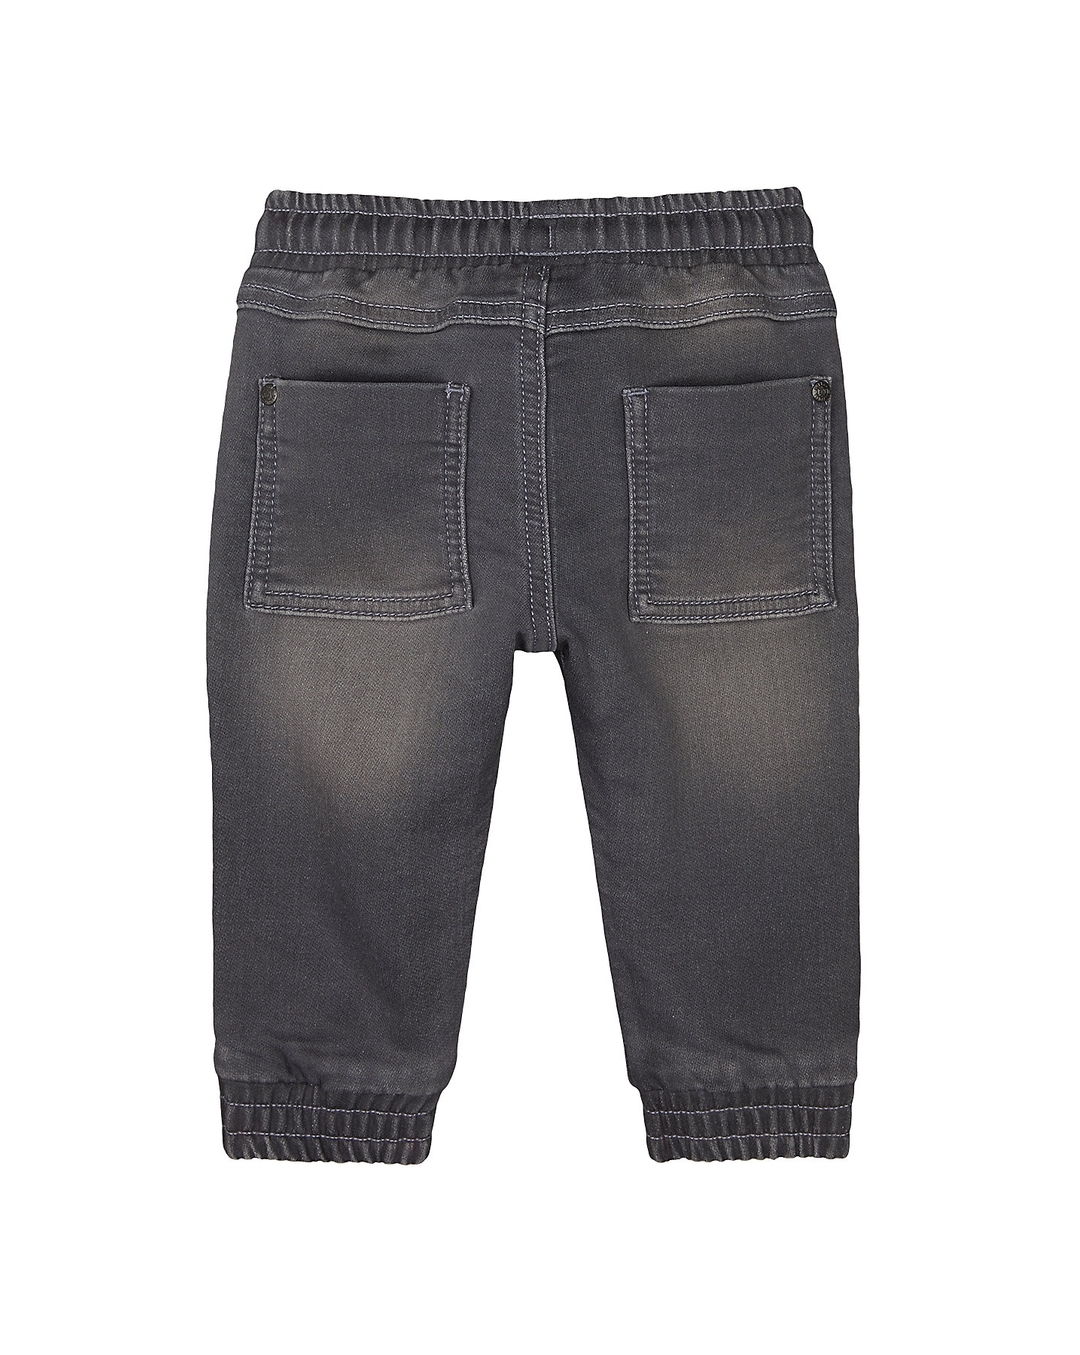 Boys Jeans With Side Pockets - Grey-saigonsouth.com.vn